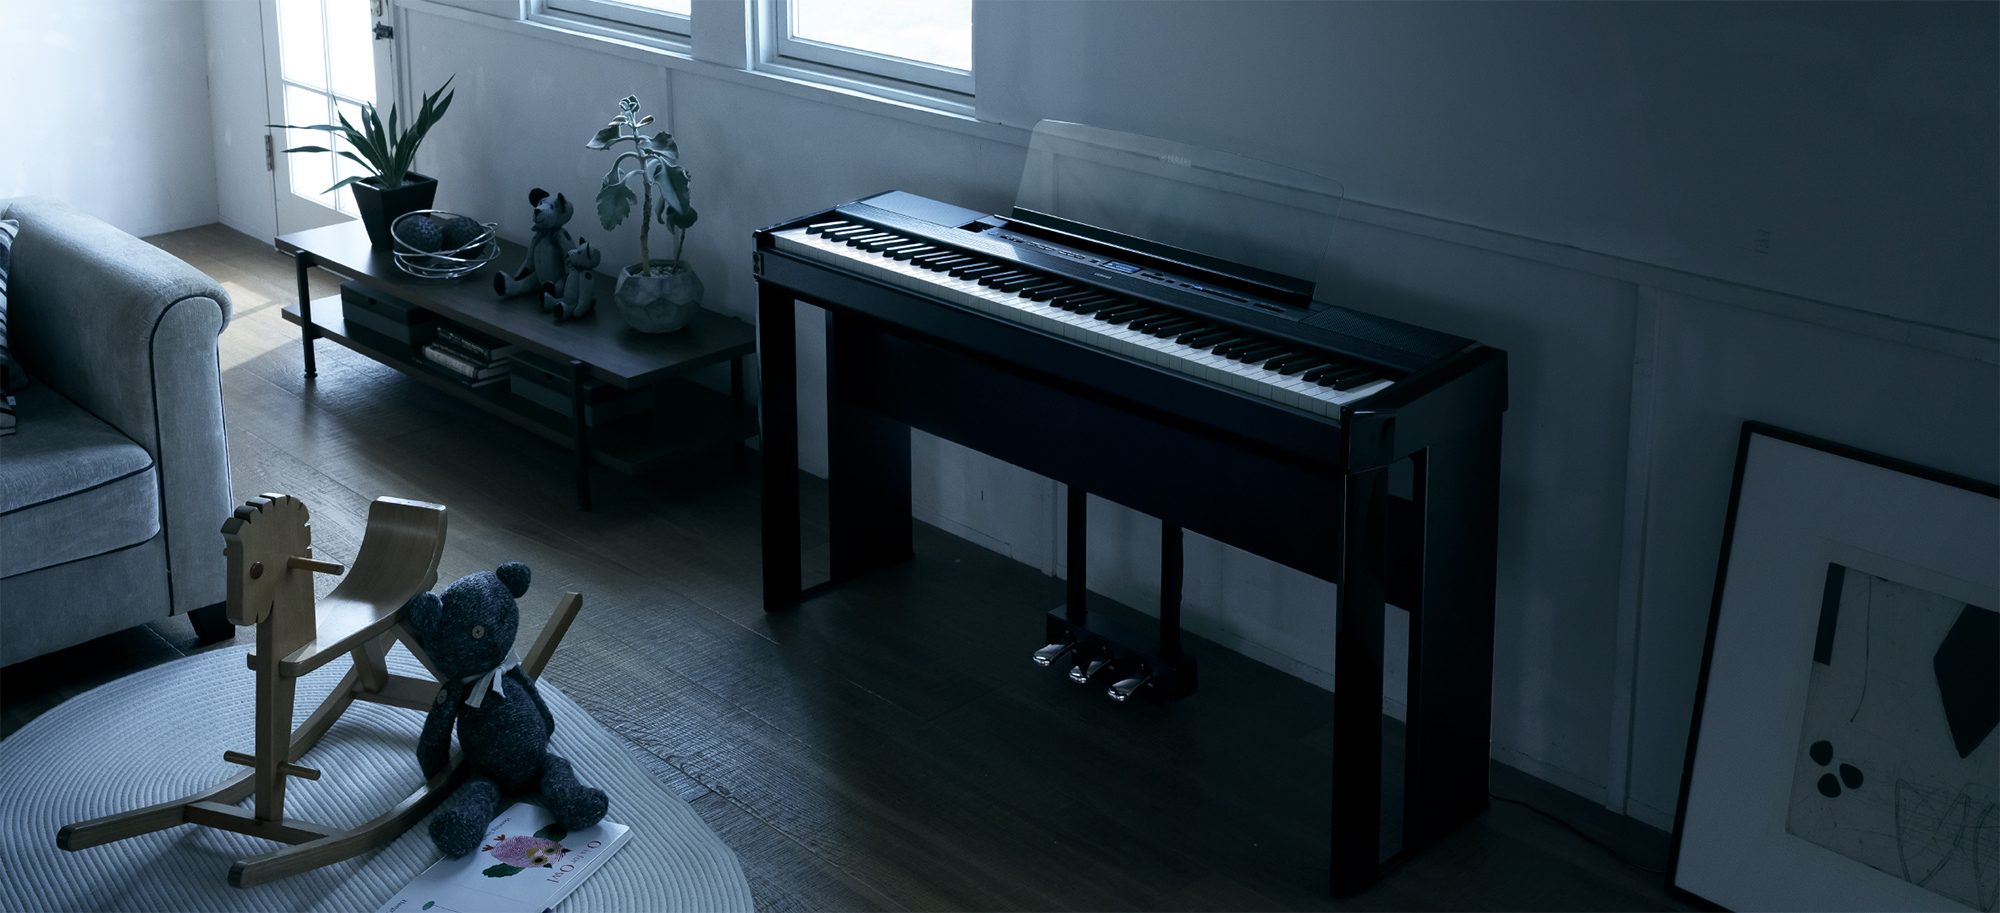 Yamaha P-515b - Black - Portable digital piano - Variation 4